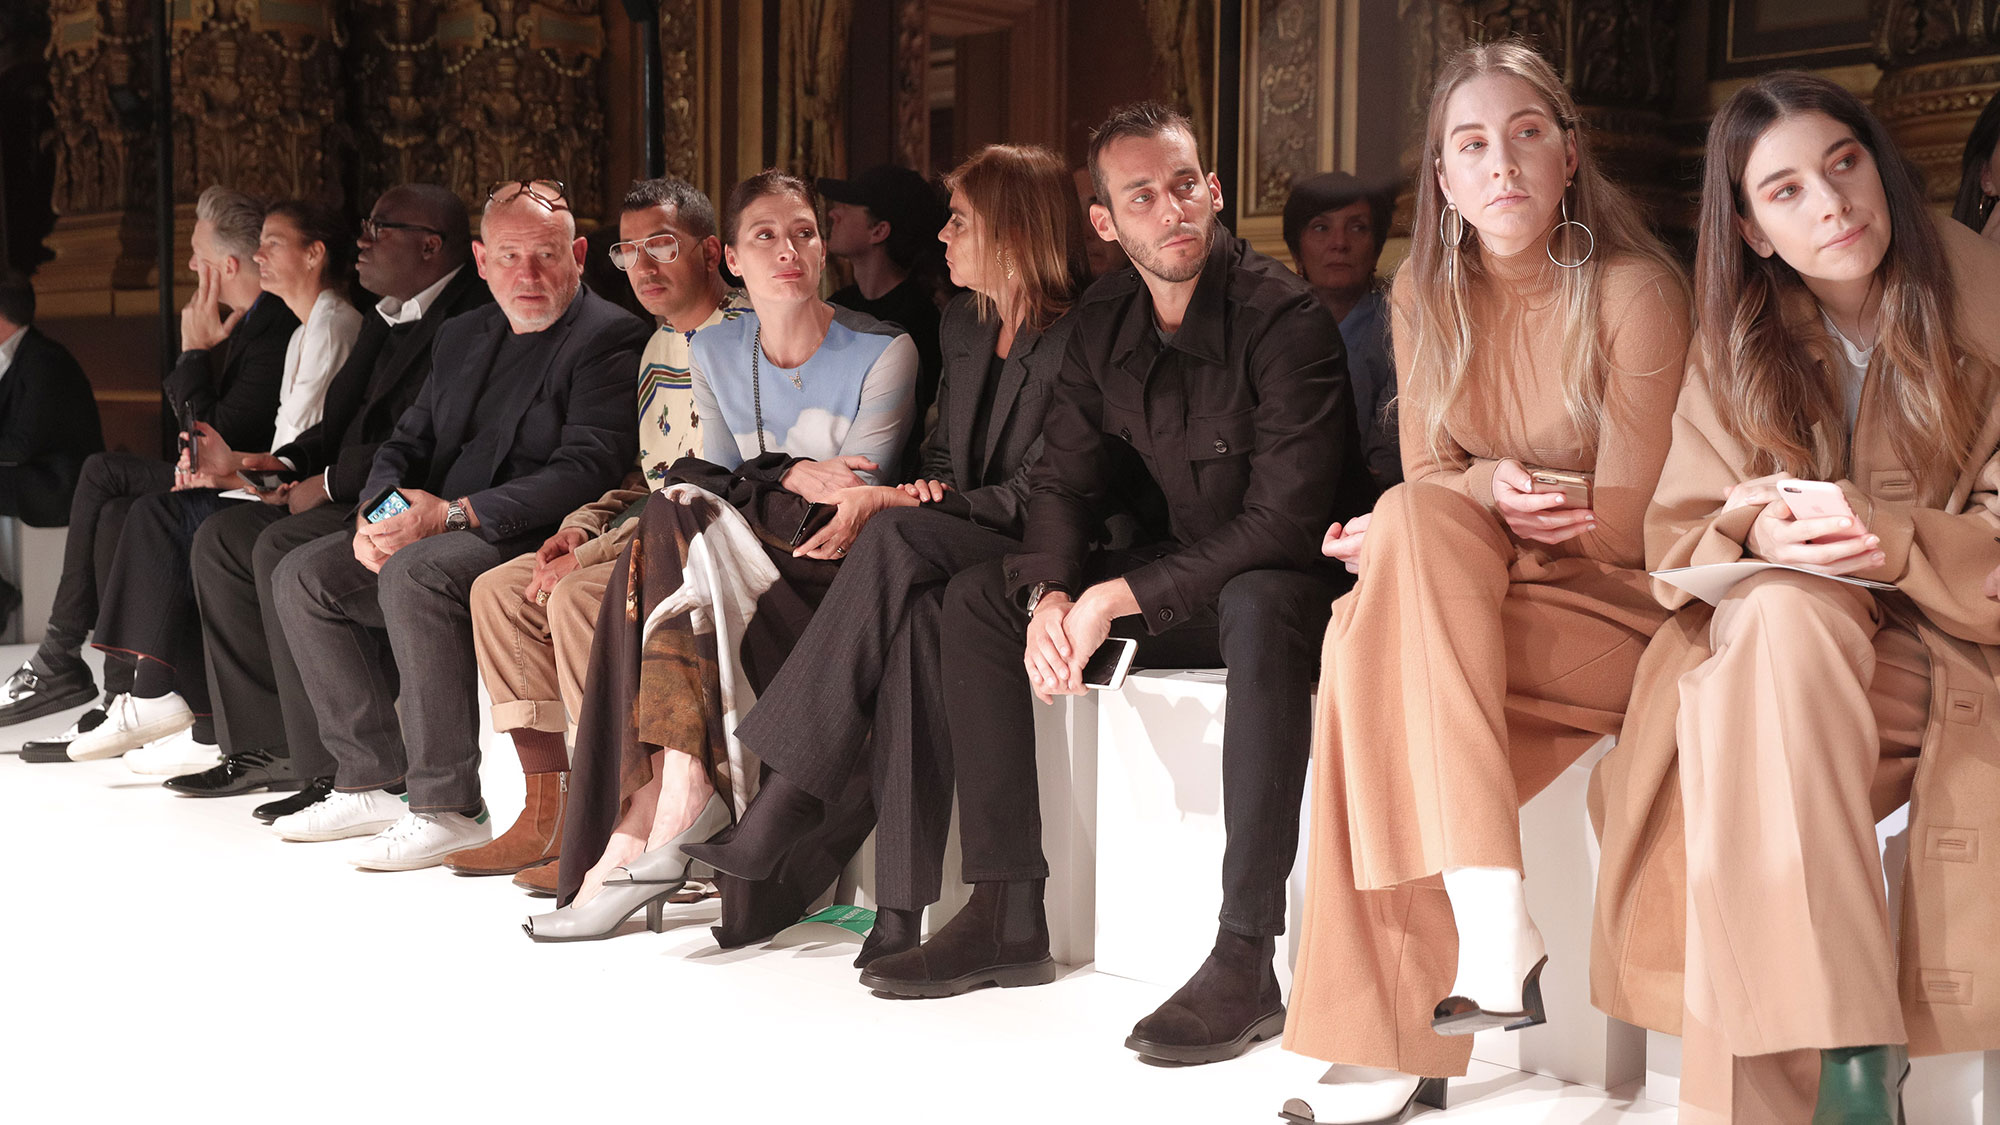 Celebrities front row at Paris Fashion Week 2020